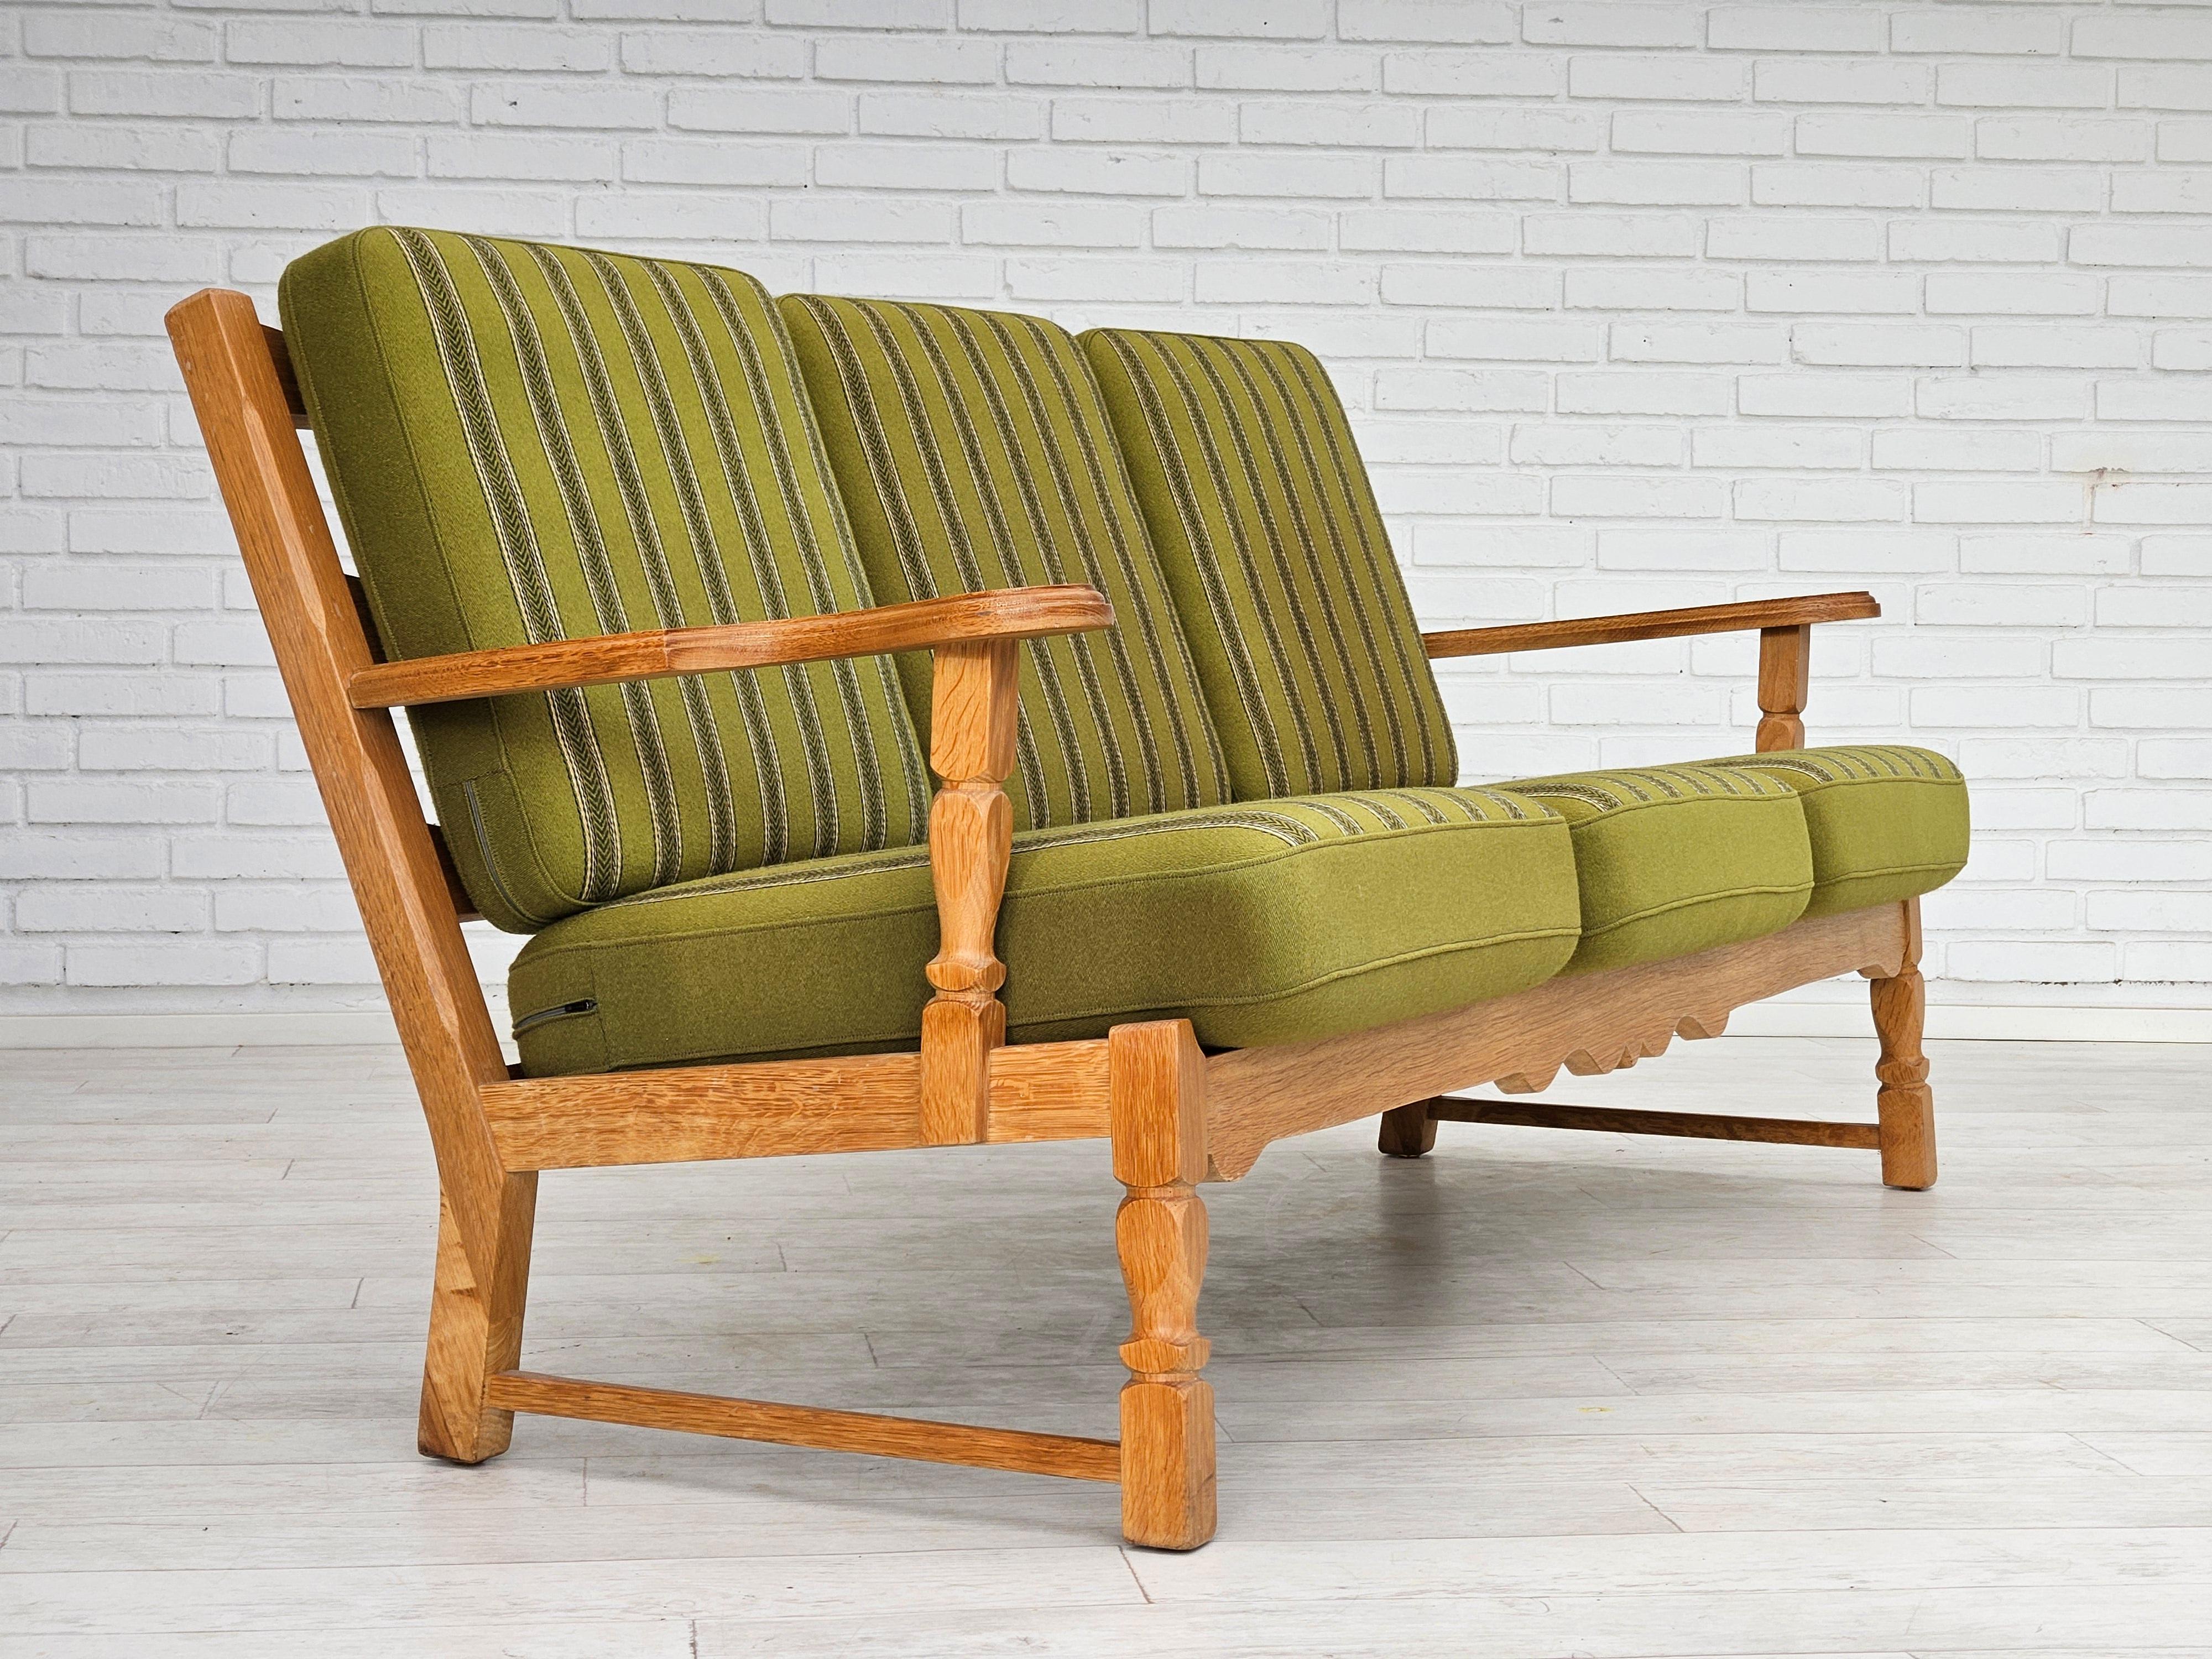 1970s, Danish design, 3 seater sofa, original condition, solid oak wood, furni In Good Condition For Sale In Tarm, 82